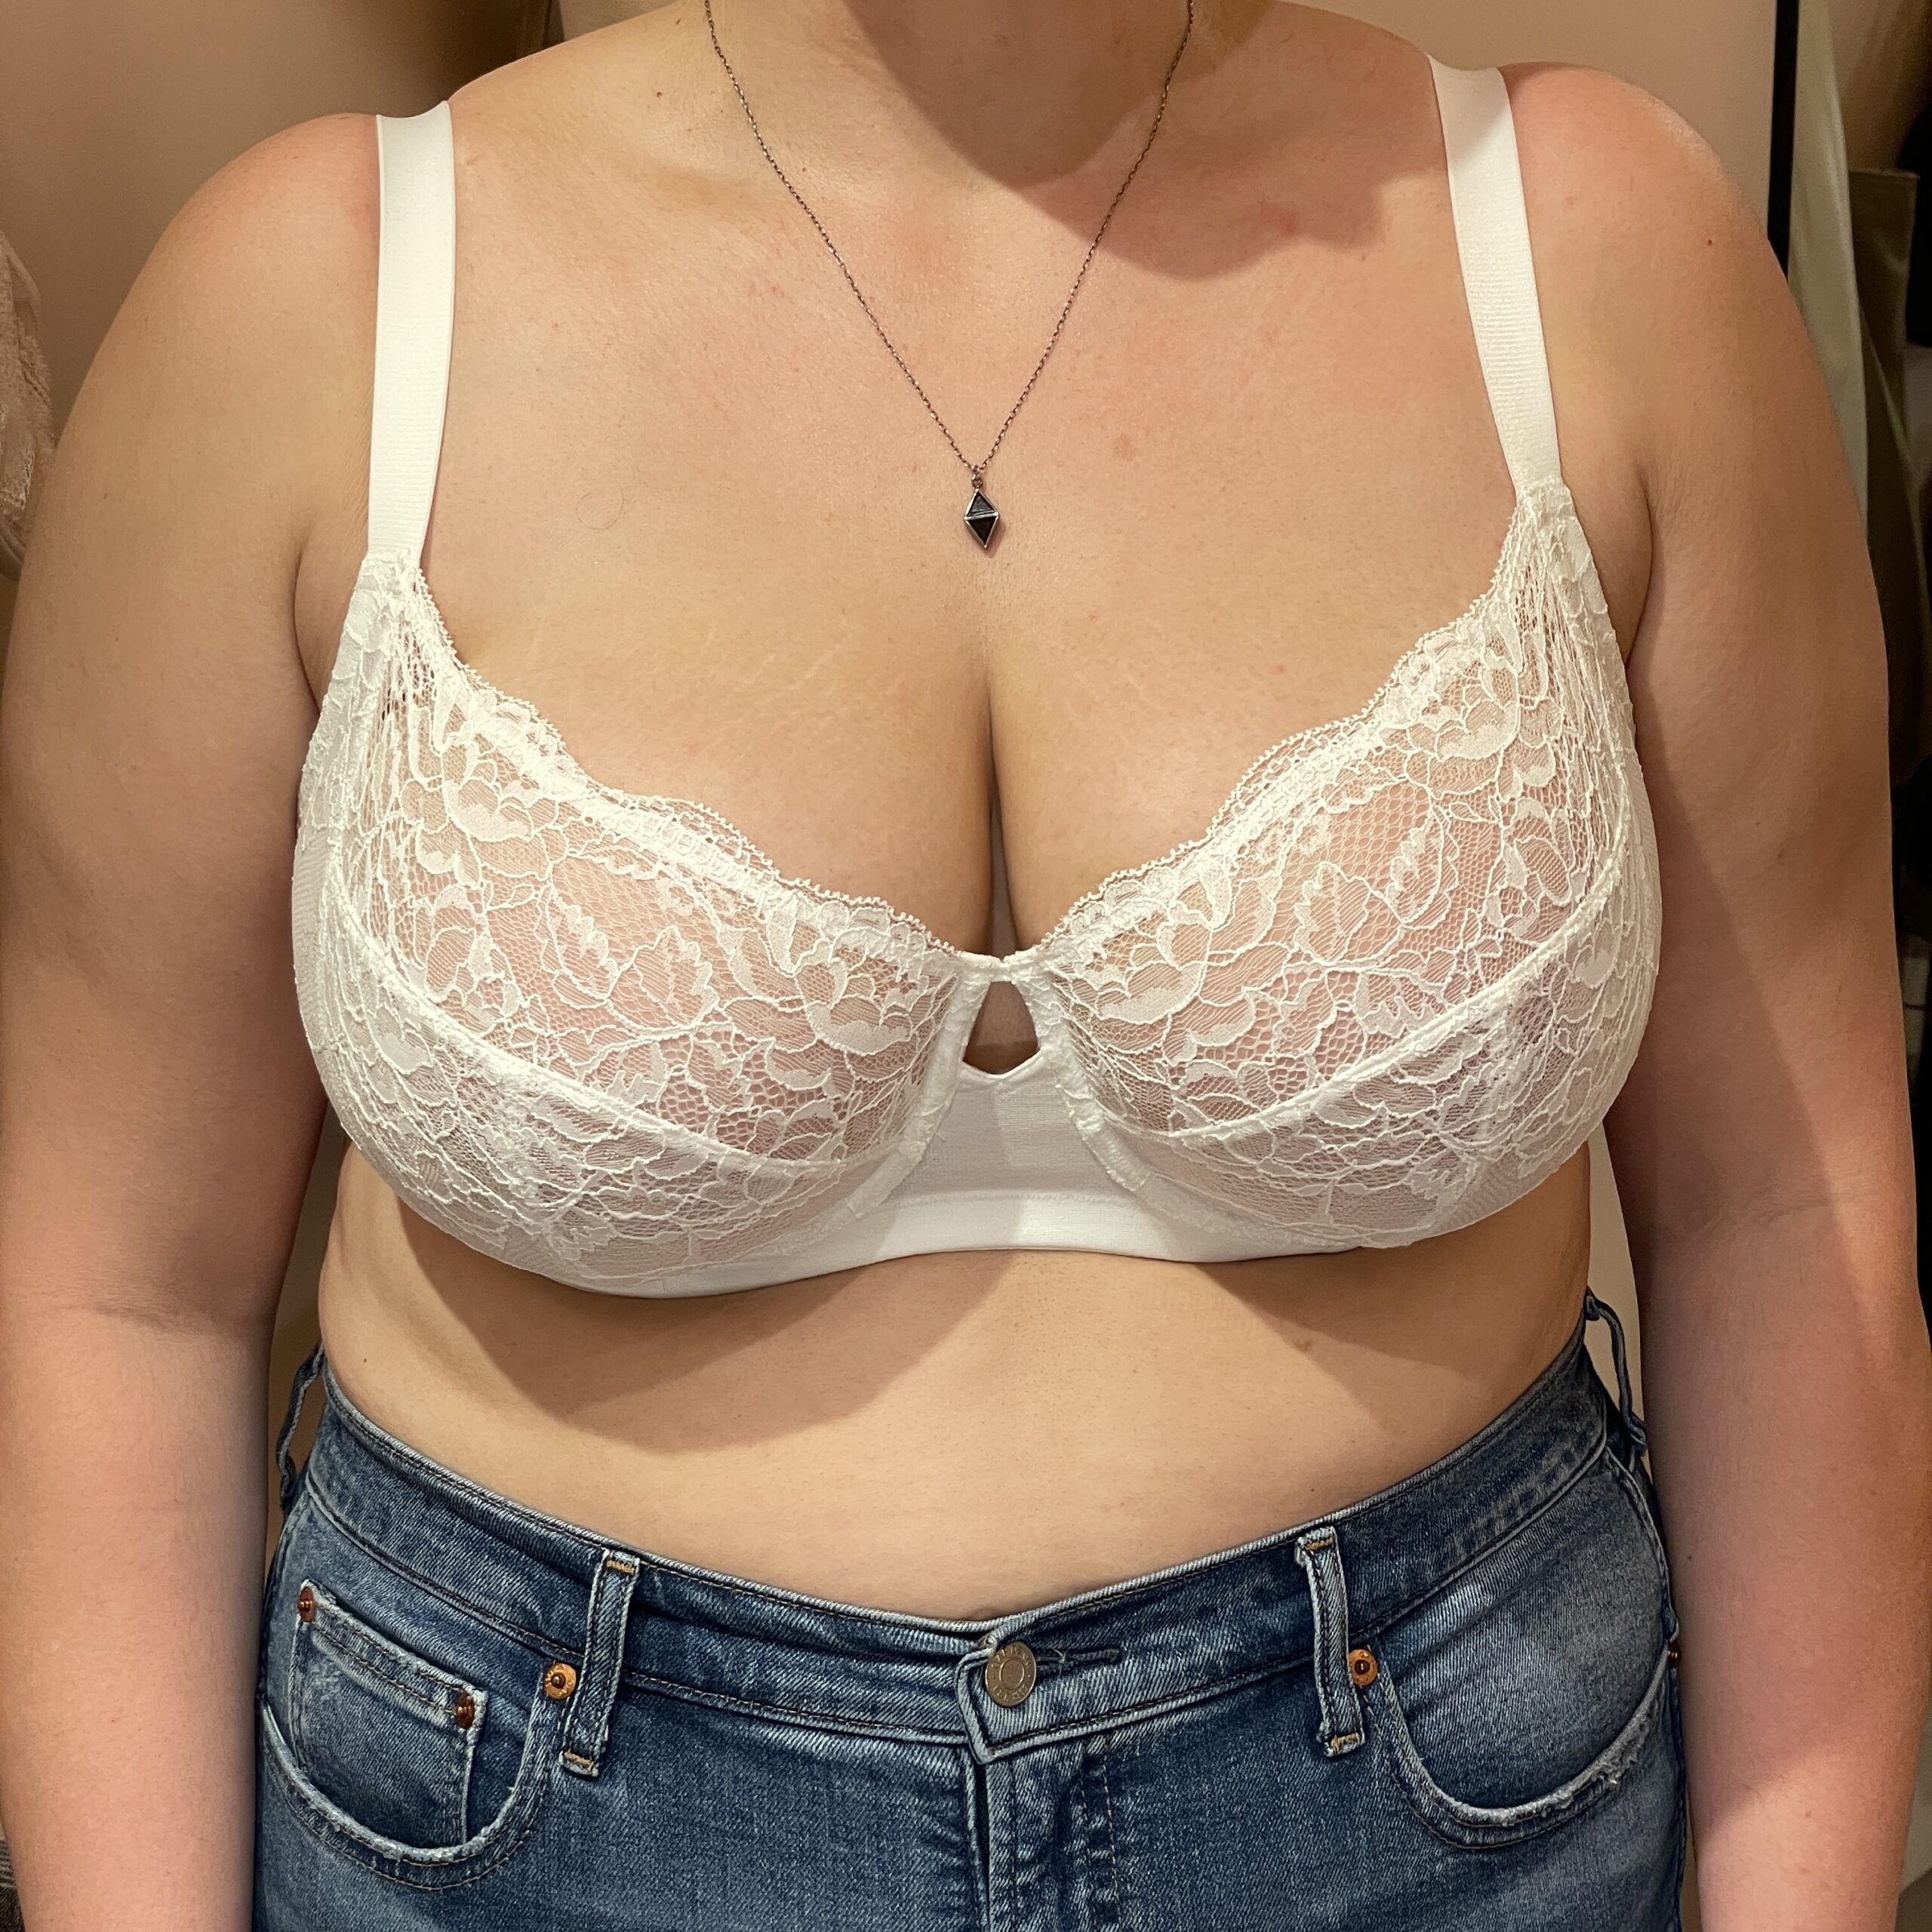 38g boob size